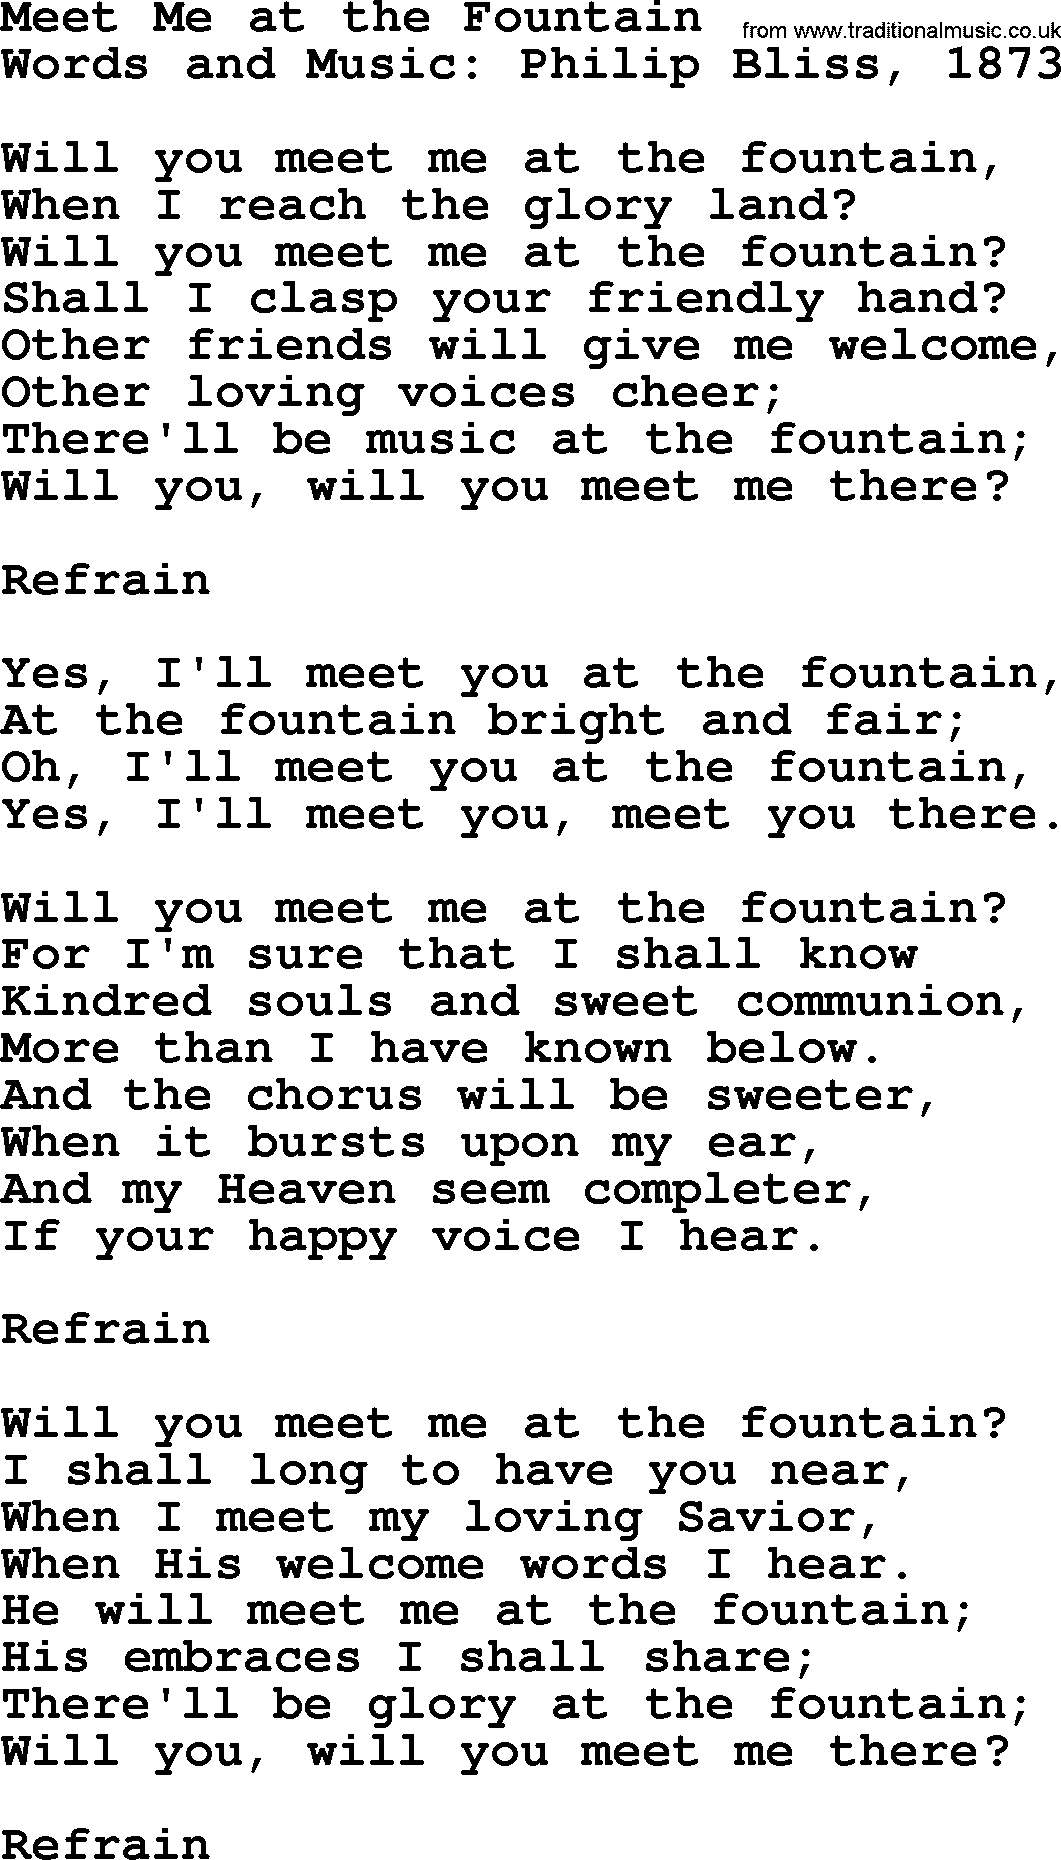 Philip Bliss Song: Meet Me At The Fountain, lyrics